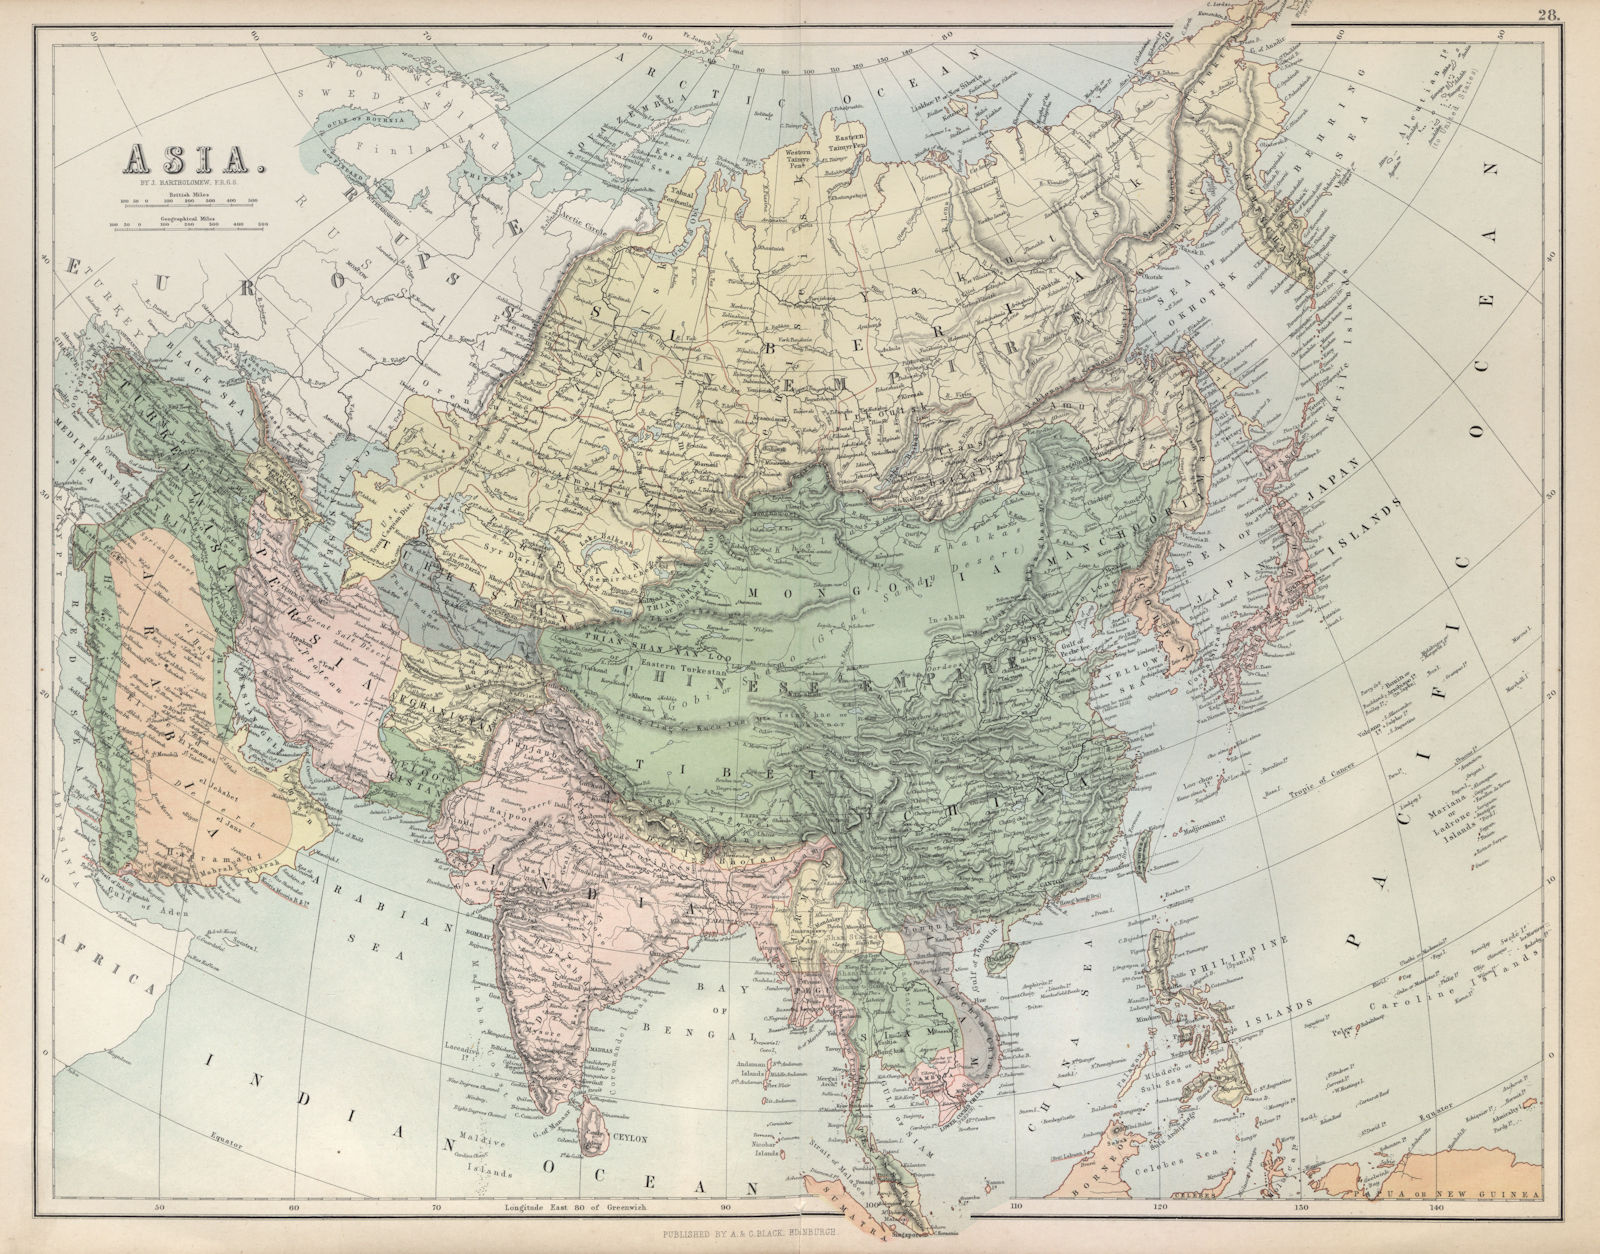 Asia. Arabia Siam China Anam Persia. Abu Thubbi (Abu Dhabi) BARTHOLOMEW 1882 map